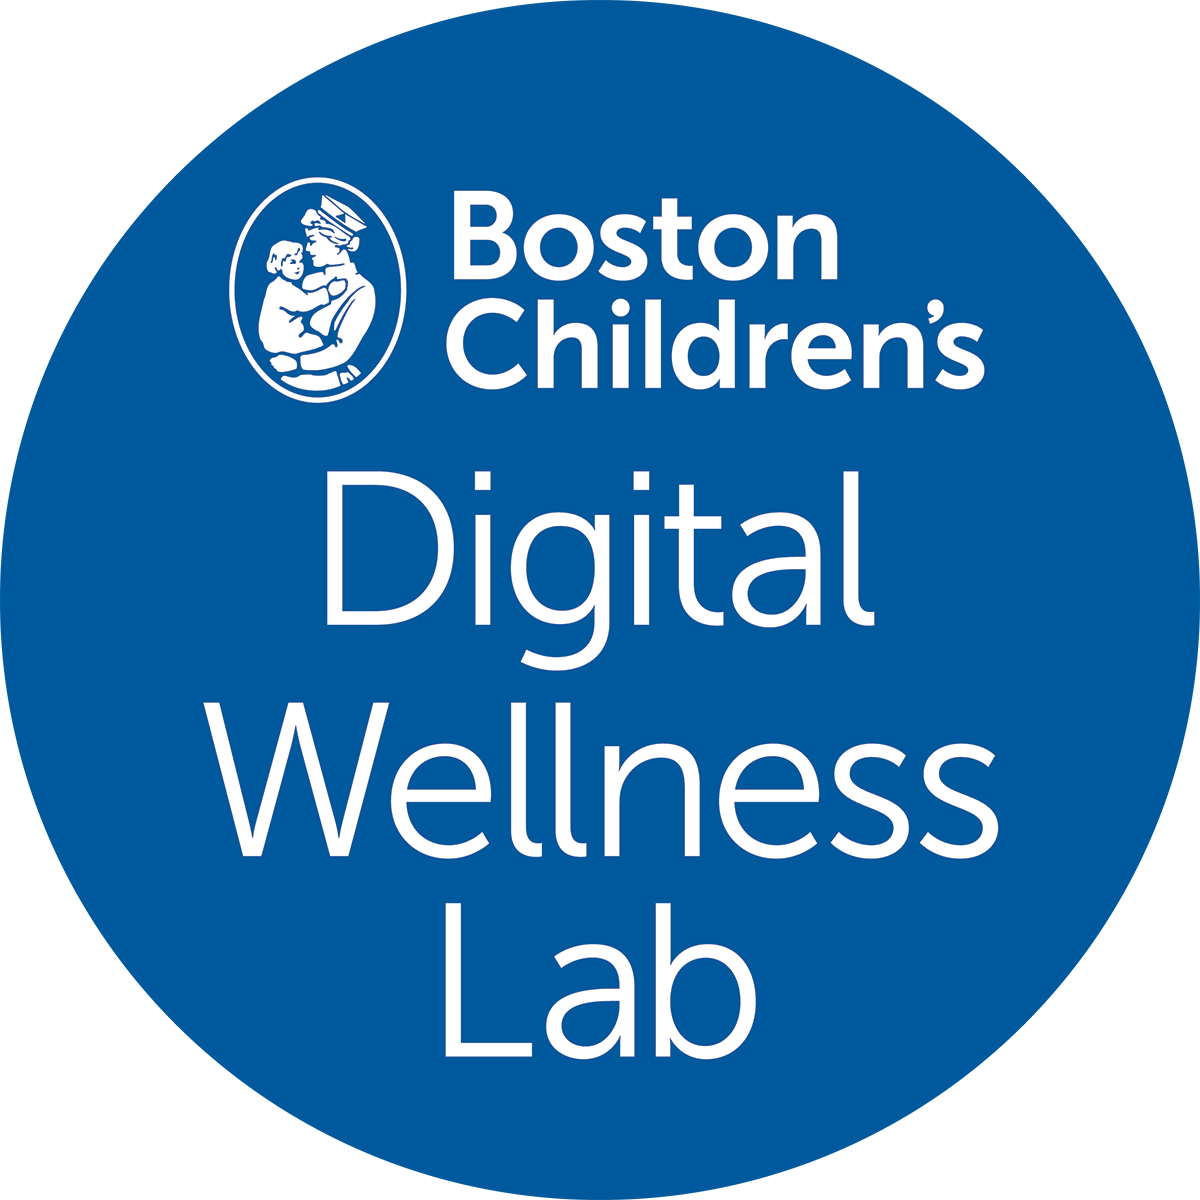 Video Games - The Digital Wellness Lab